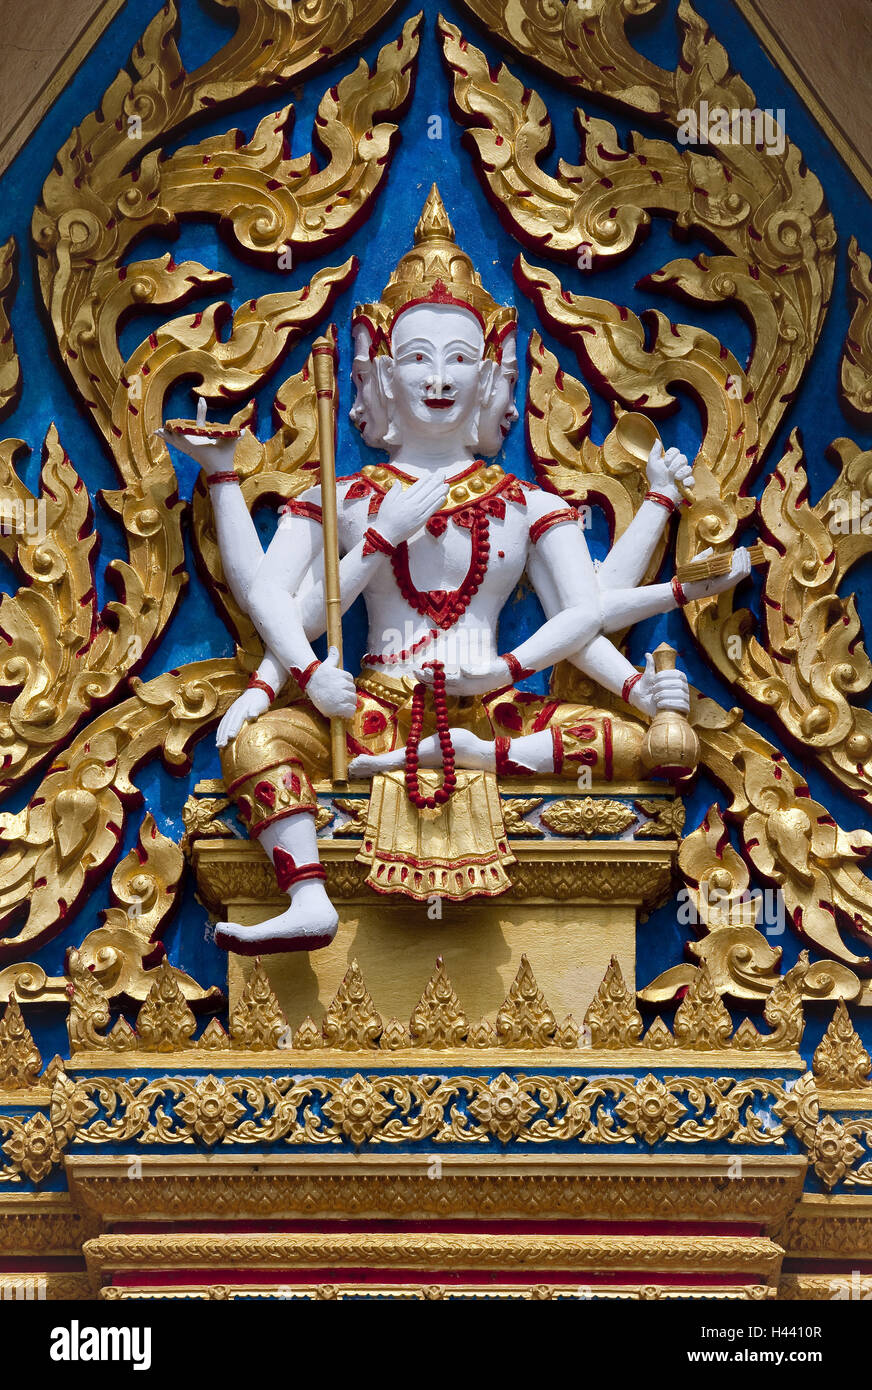 Thailand, Phuket, Wat Chalong Temple facade, carving, God figure, Stock Photo